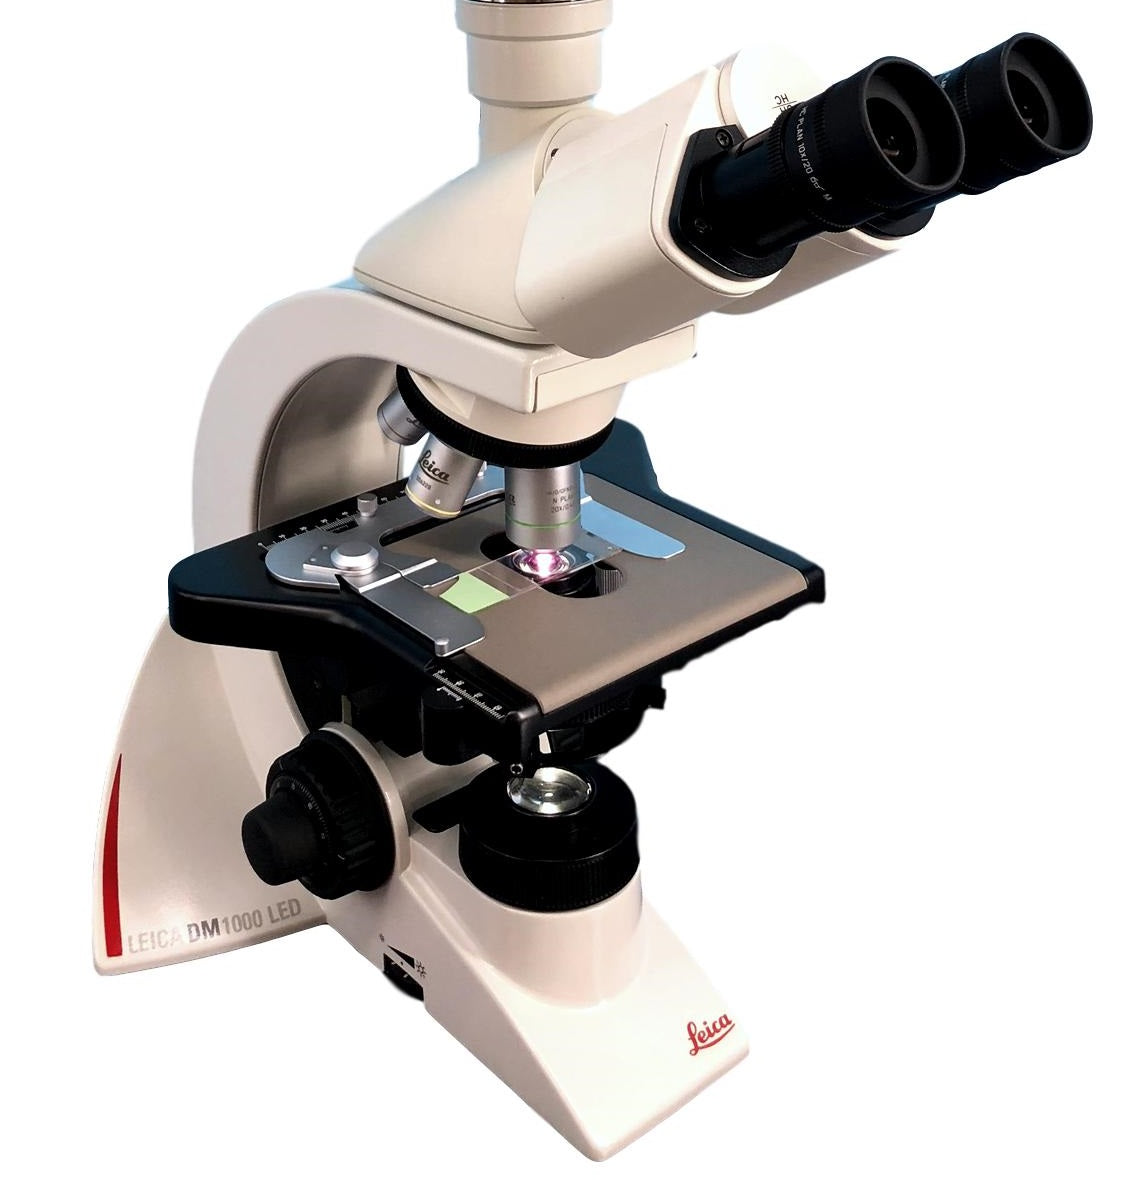 Leica DM1000 Trinocular Microscope